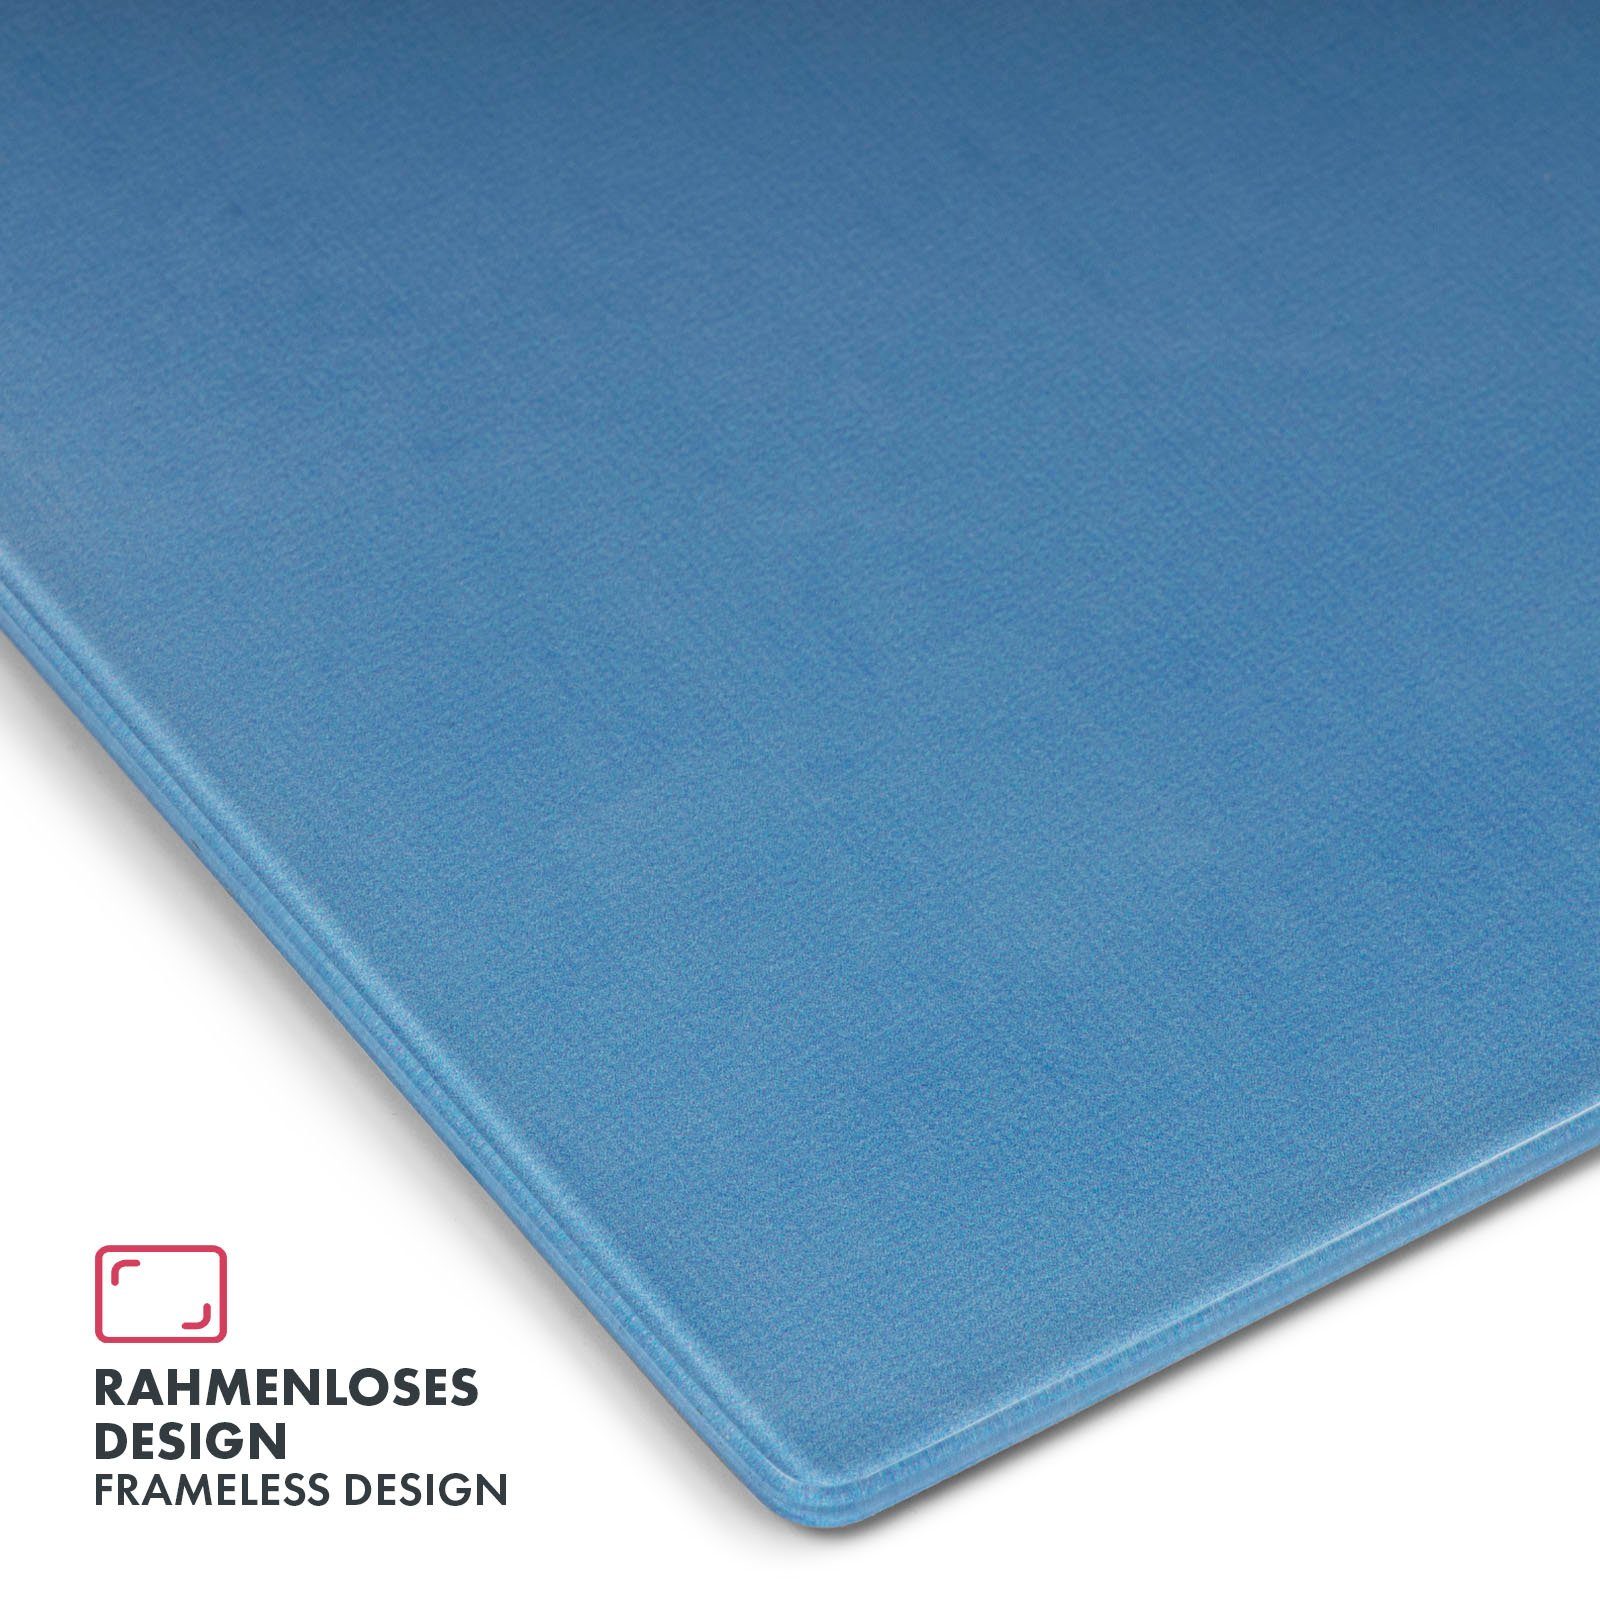 Inkl. Farben Karat Design-Glas-Memoboard, - Memoboard Größen & Blau Print & Montagematerial, Magnete Verschiedene